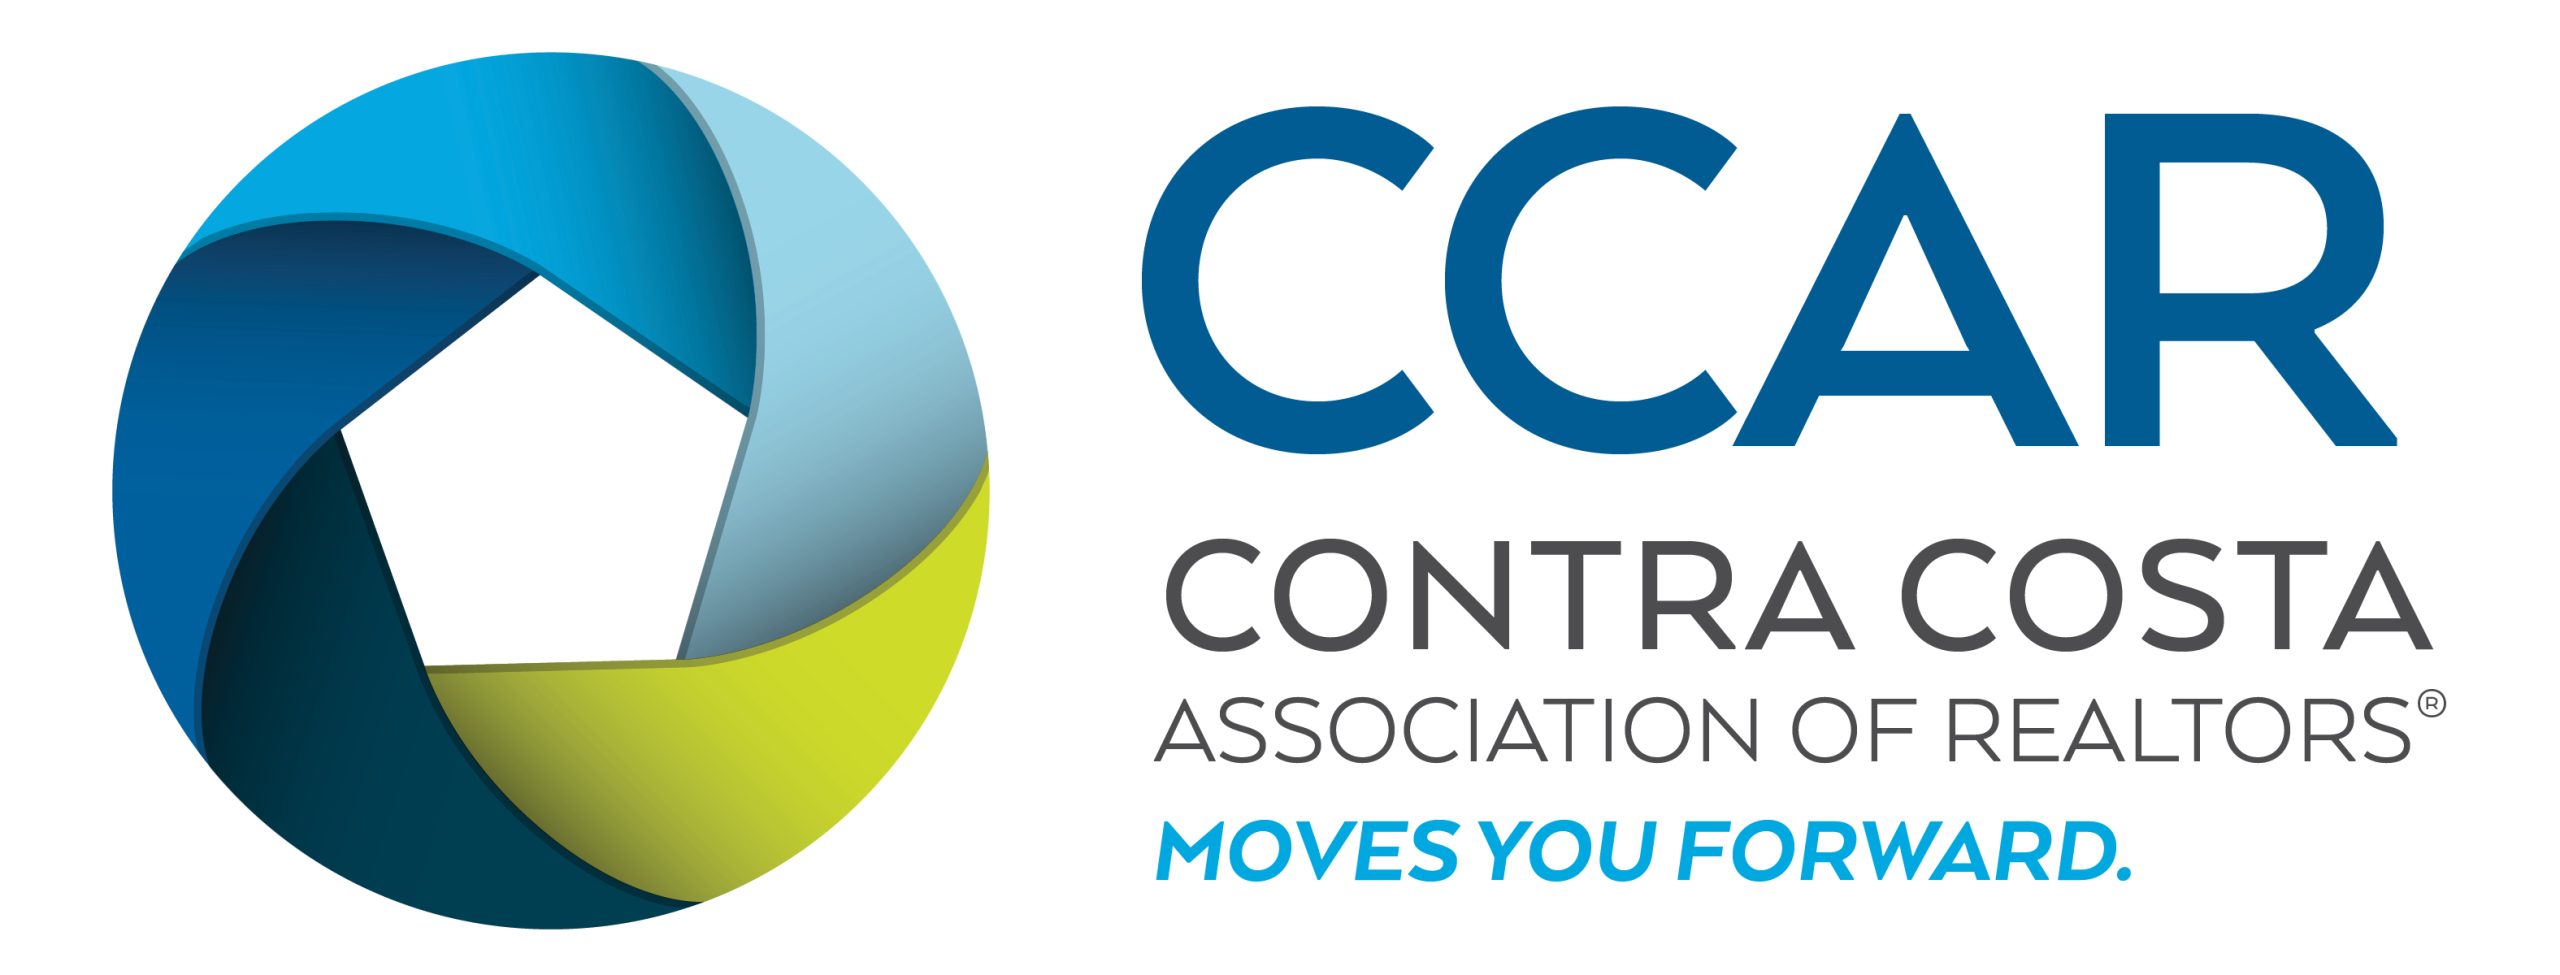 Contra Costa Association of Realtors logo